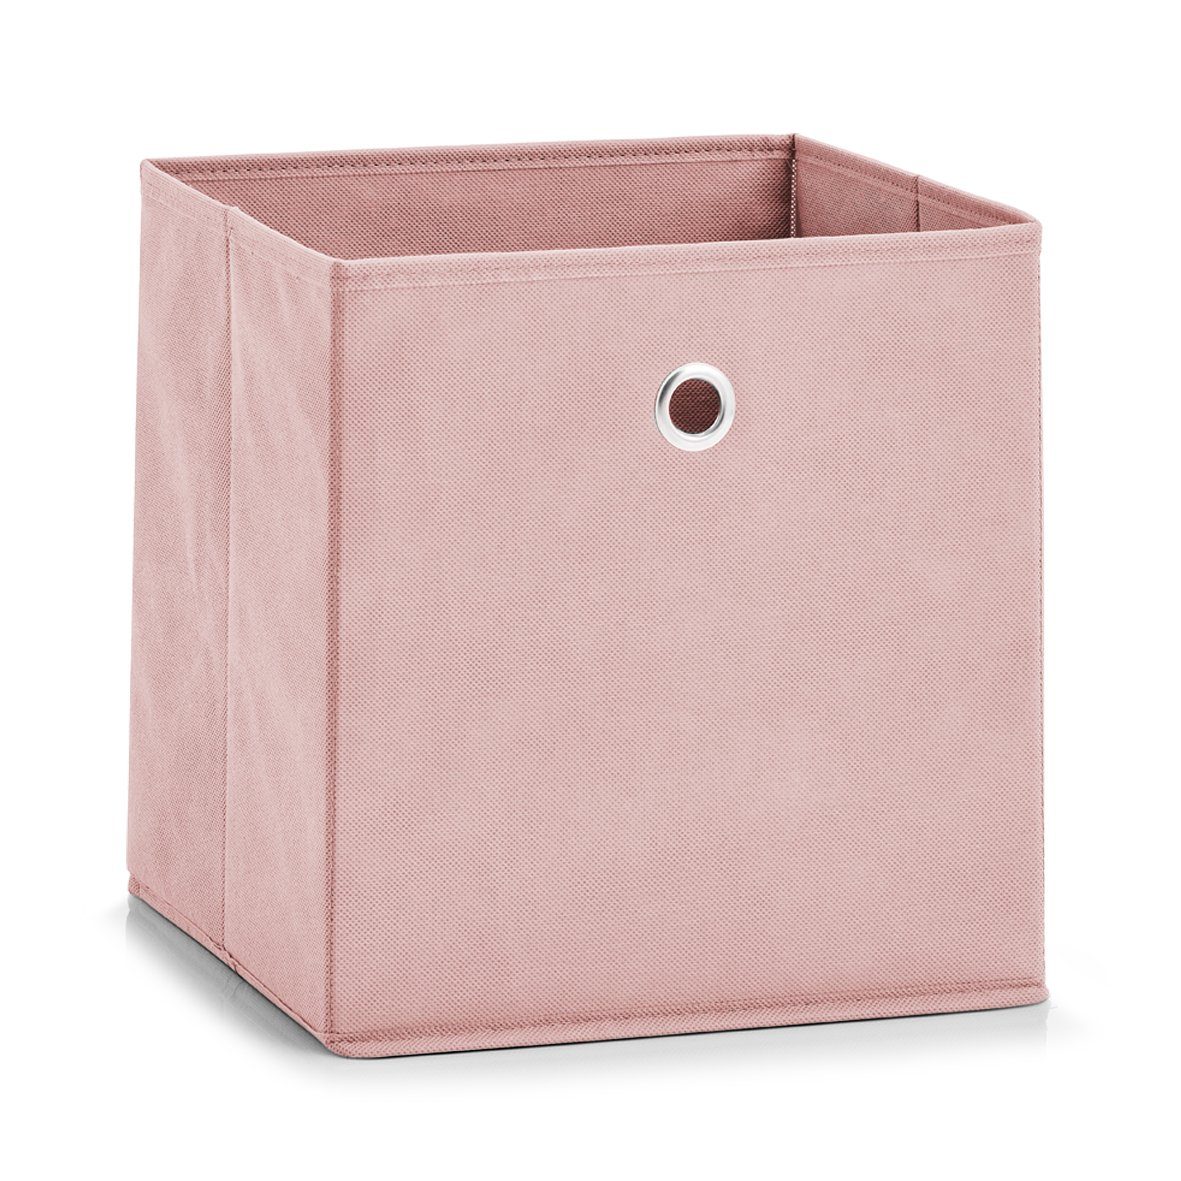 Zeller Present Aufbewahrungskorb Aufbewahrungsbox, x 28 x Vlies, cm rosé, 28 28